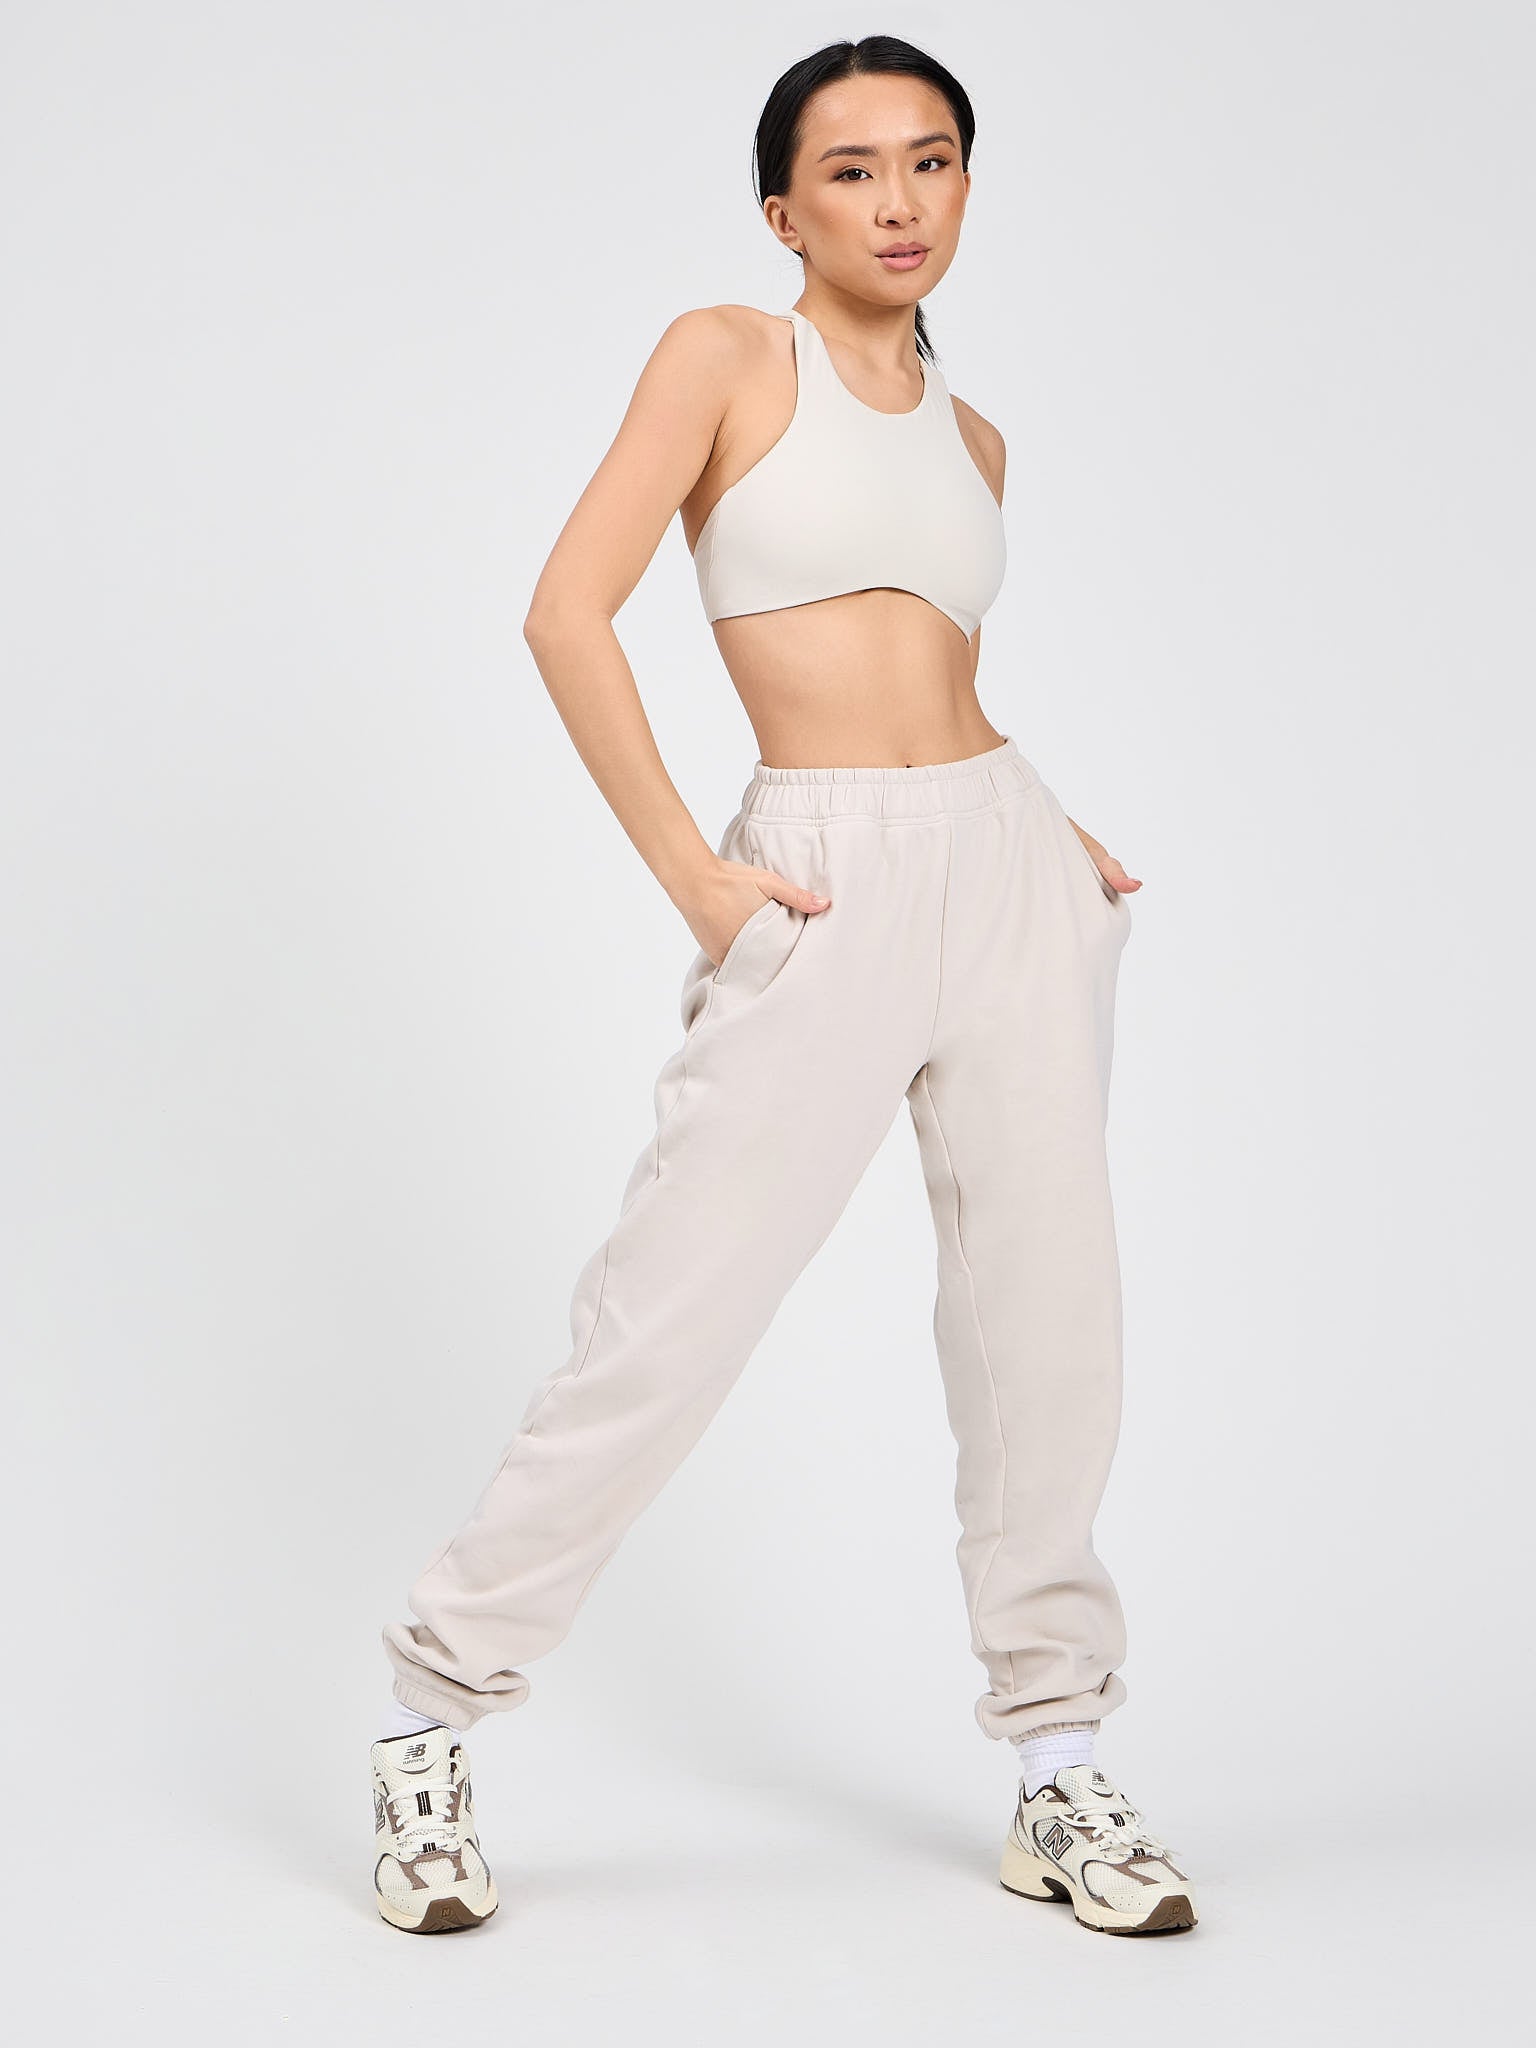 Buffbunny Bra Women Fitness Sport Top Yoga Sportswear Soft Gym Workout Tops  Breathable Buff Bunny Crop Running Gym Underwear